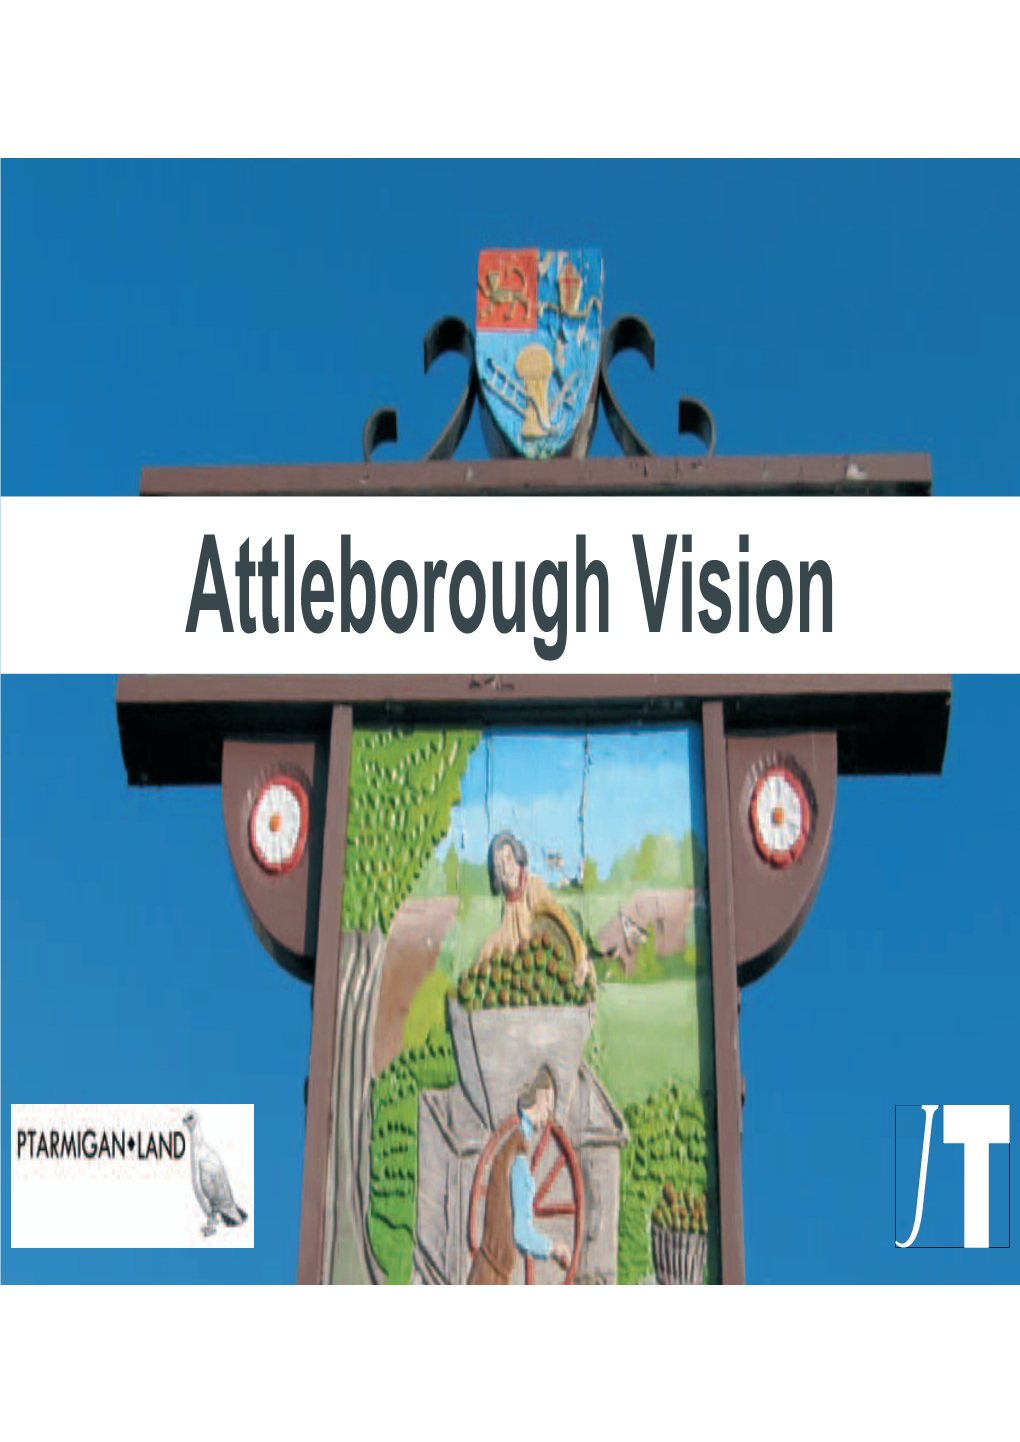 Attleborough Vision Planning Context